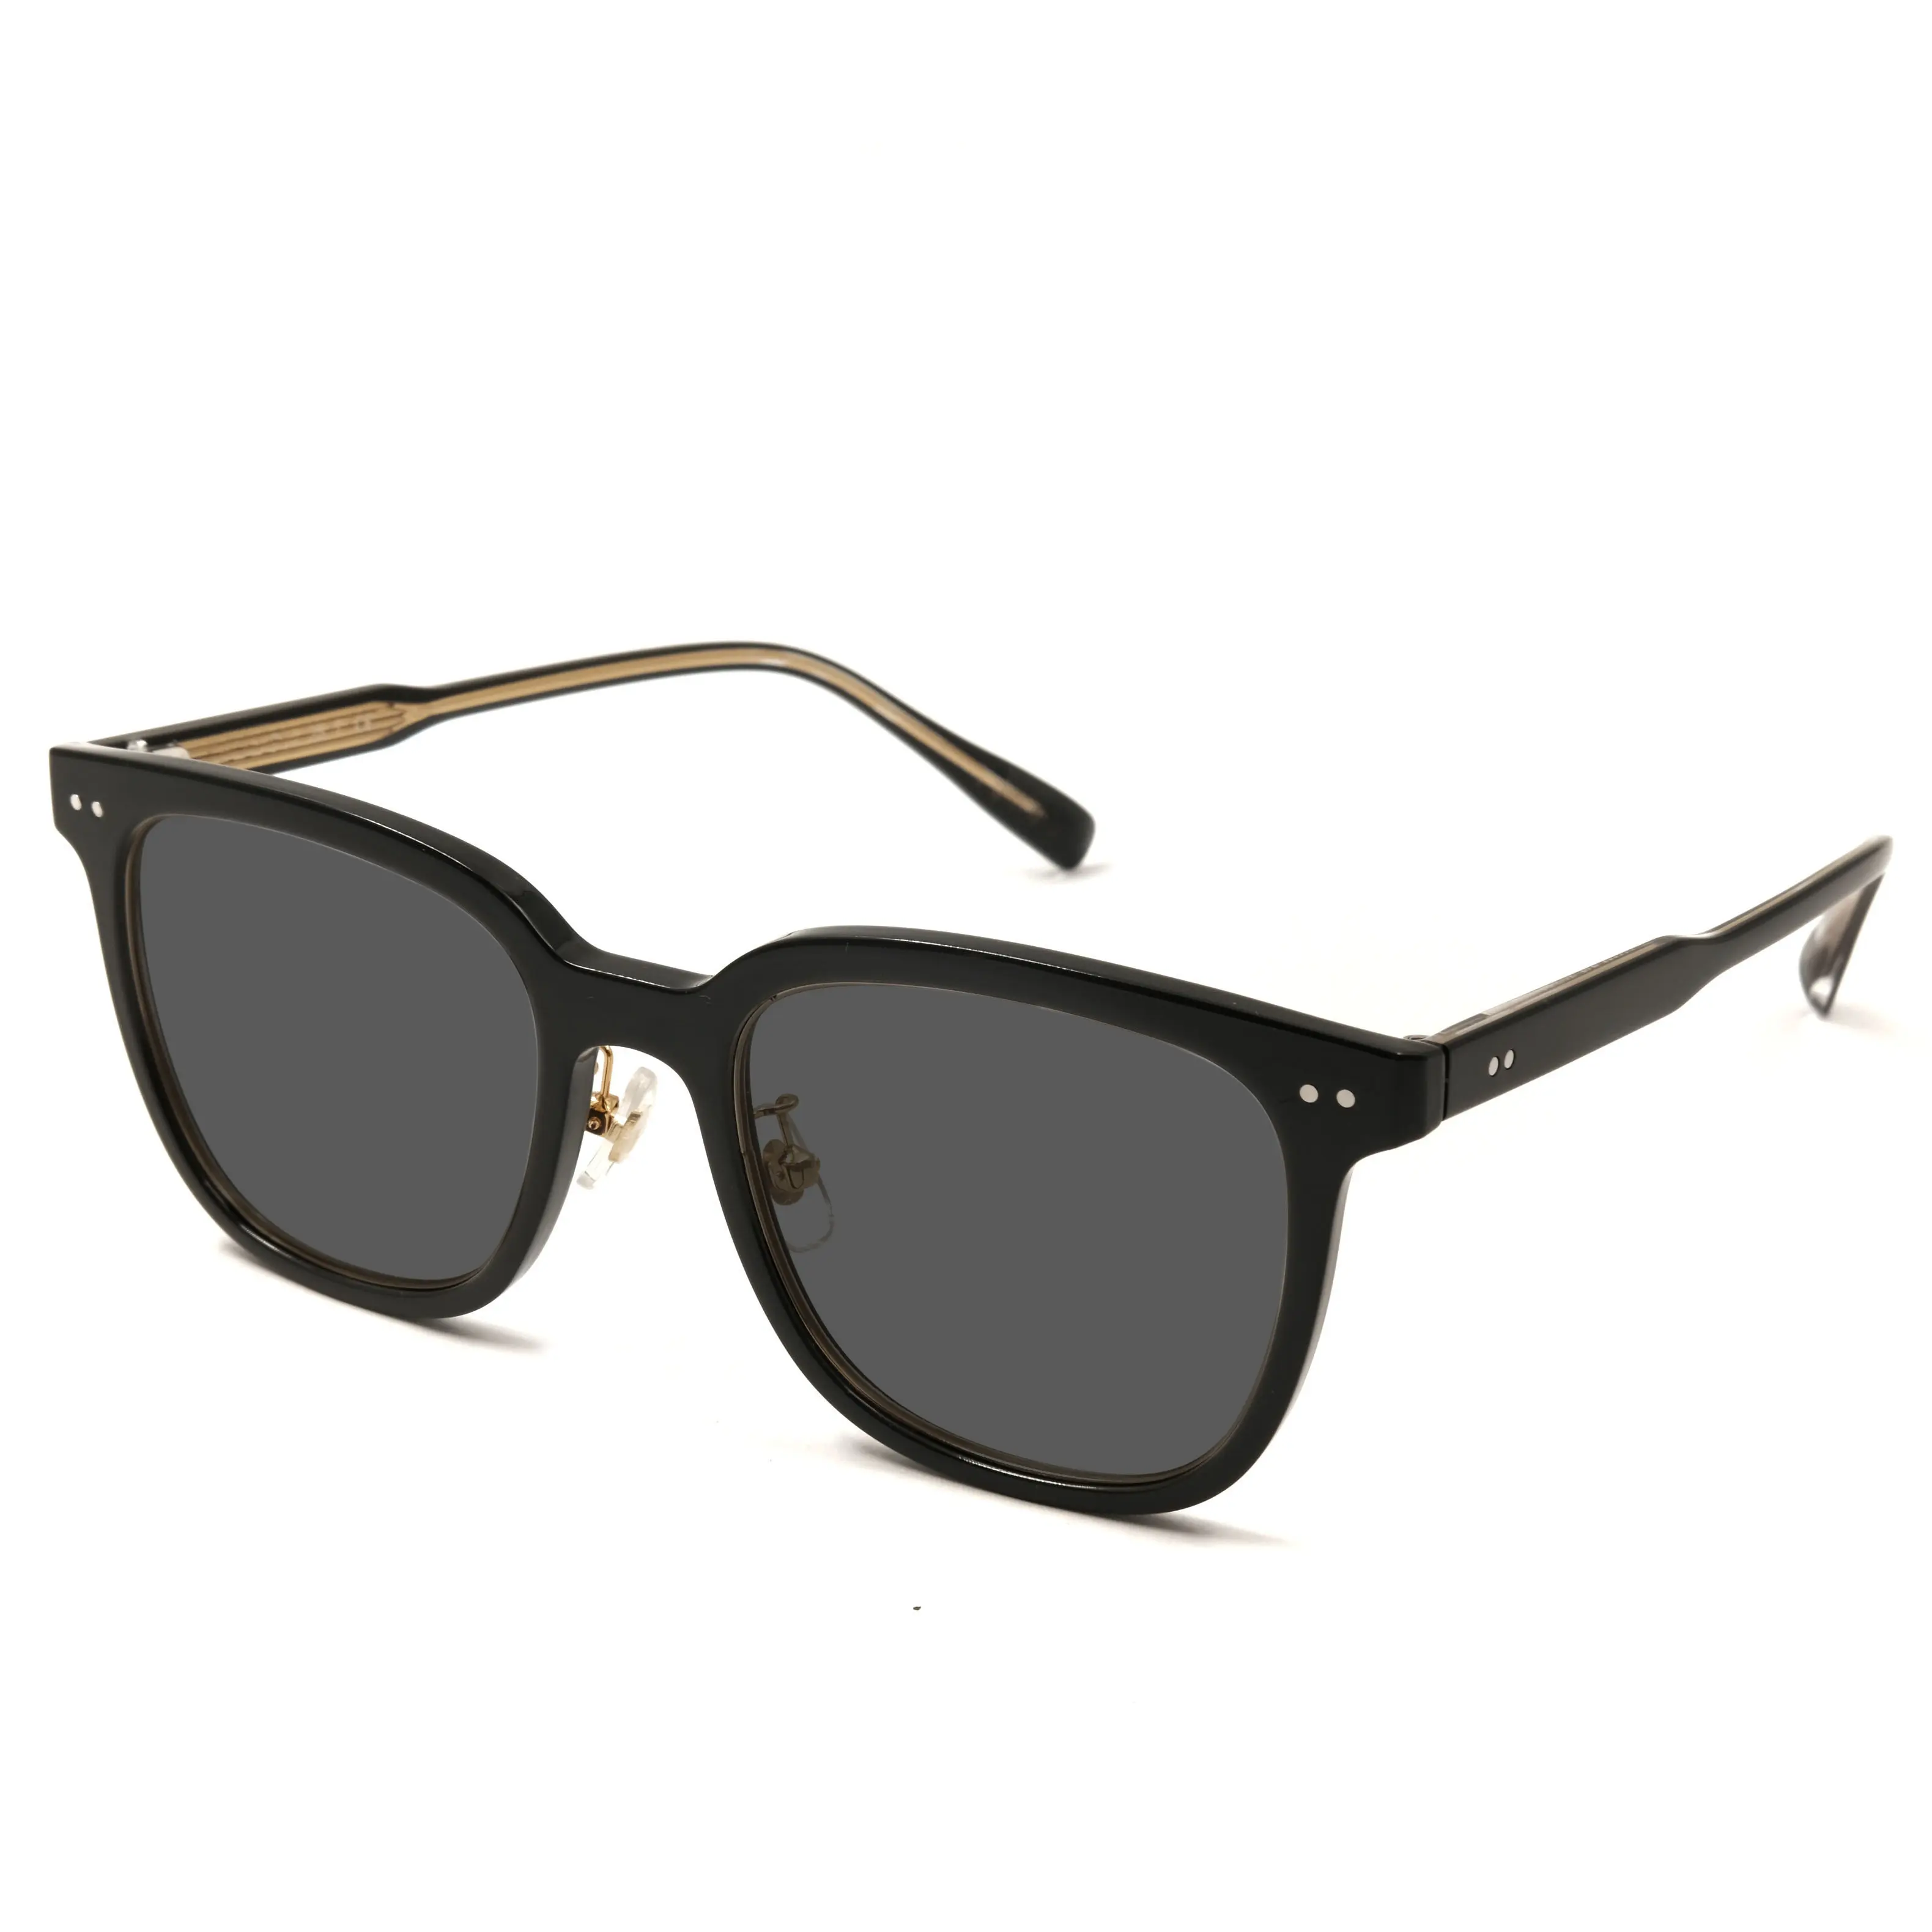 Black color sunglasses shades 2022 custom made high quality luxury sun glasses 2022 with logo